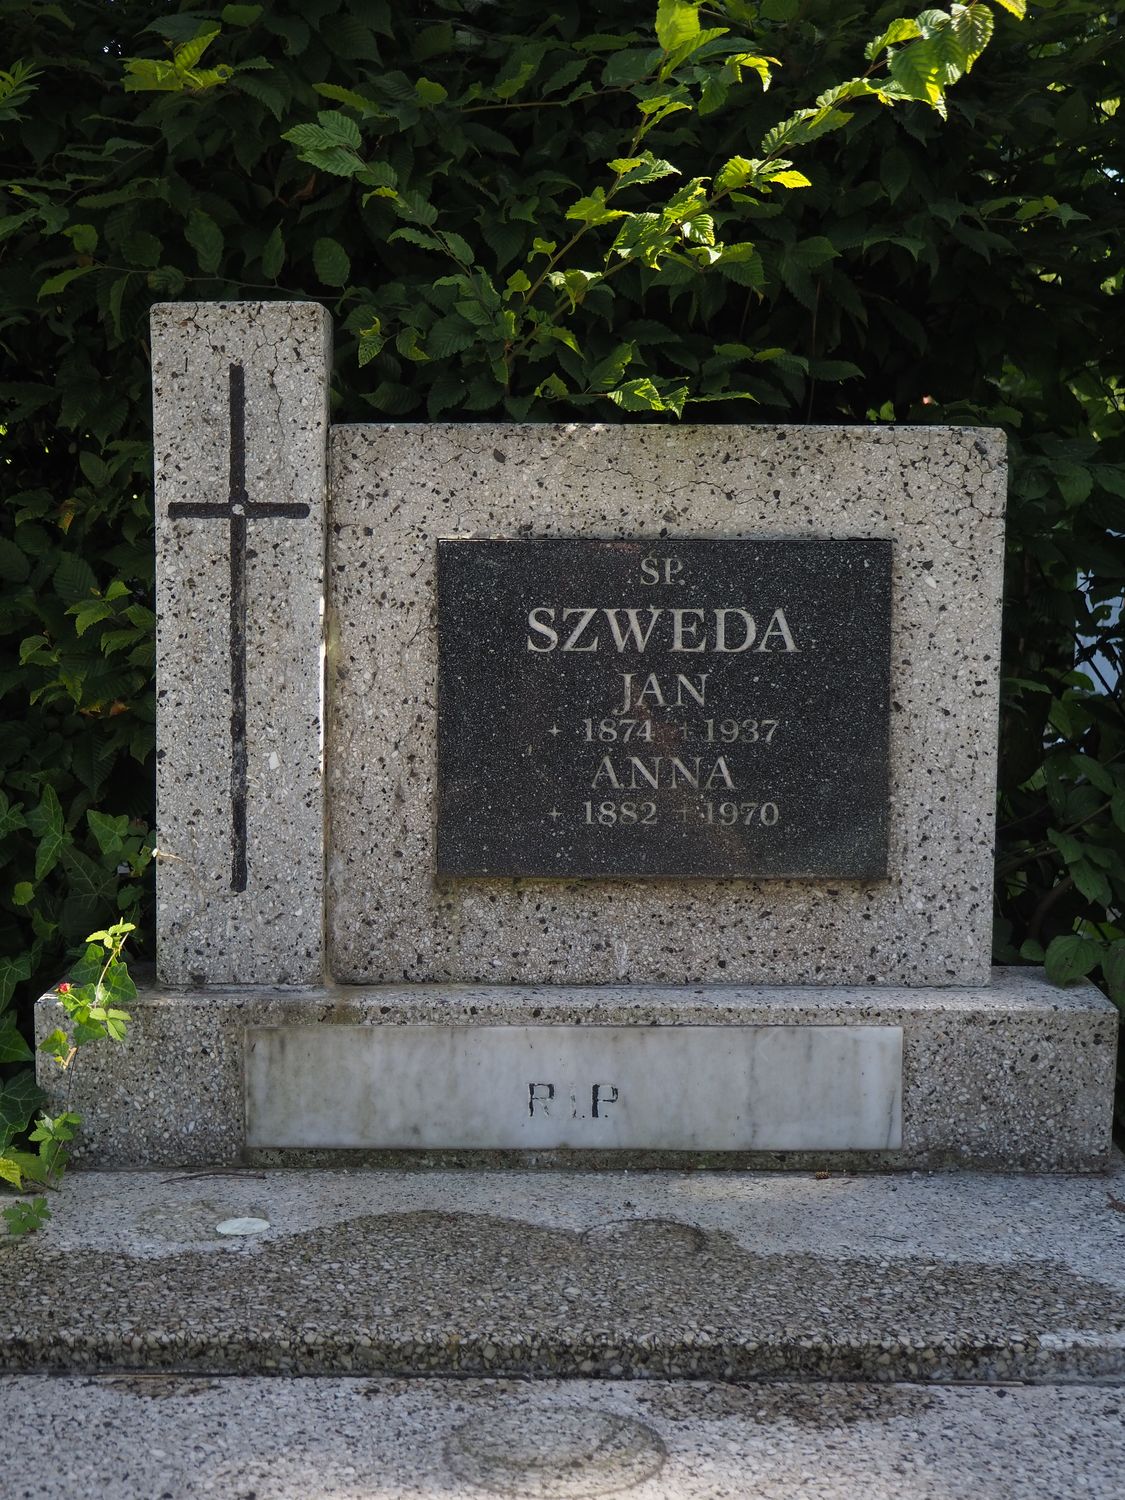 Fragment of the gravestone of Anna and Jan Szwed, cemetery in Český Těšín, as of 2022.